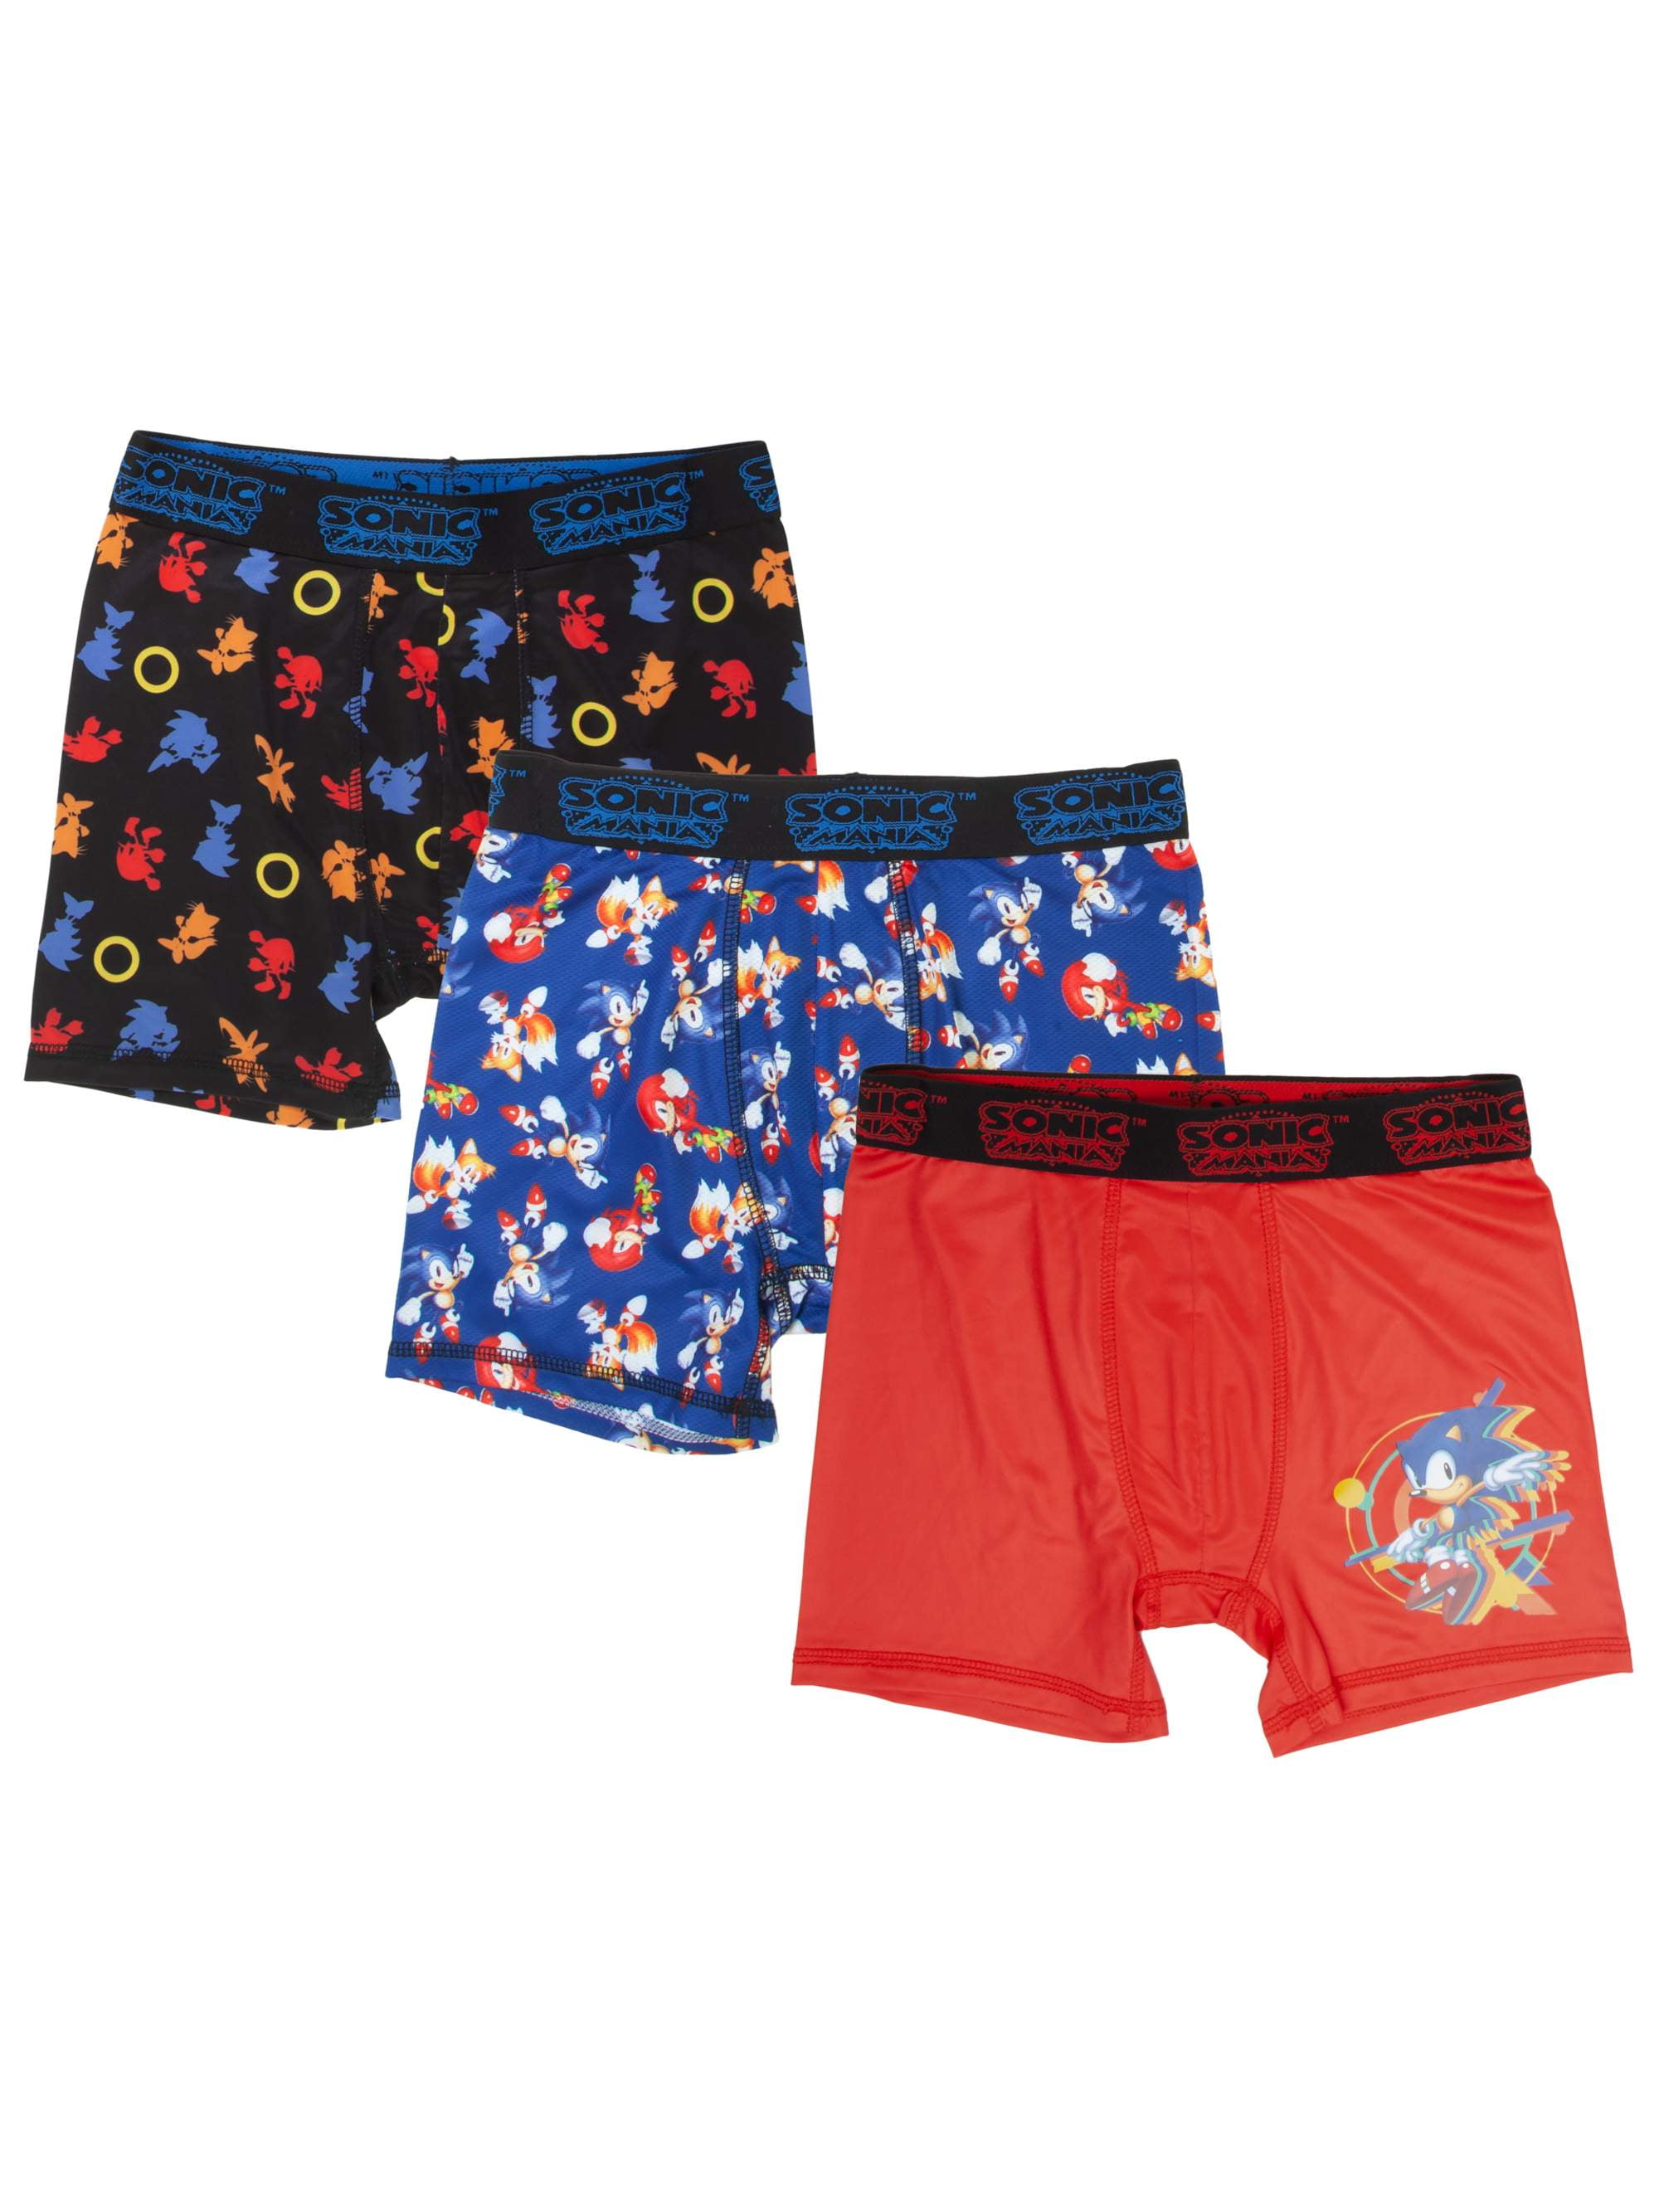 Sonic Hedgehog Boys Underwear, 3 Pack Boxer Brief (Little Boys